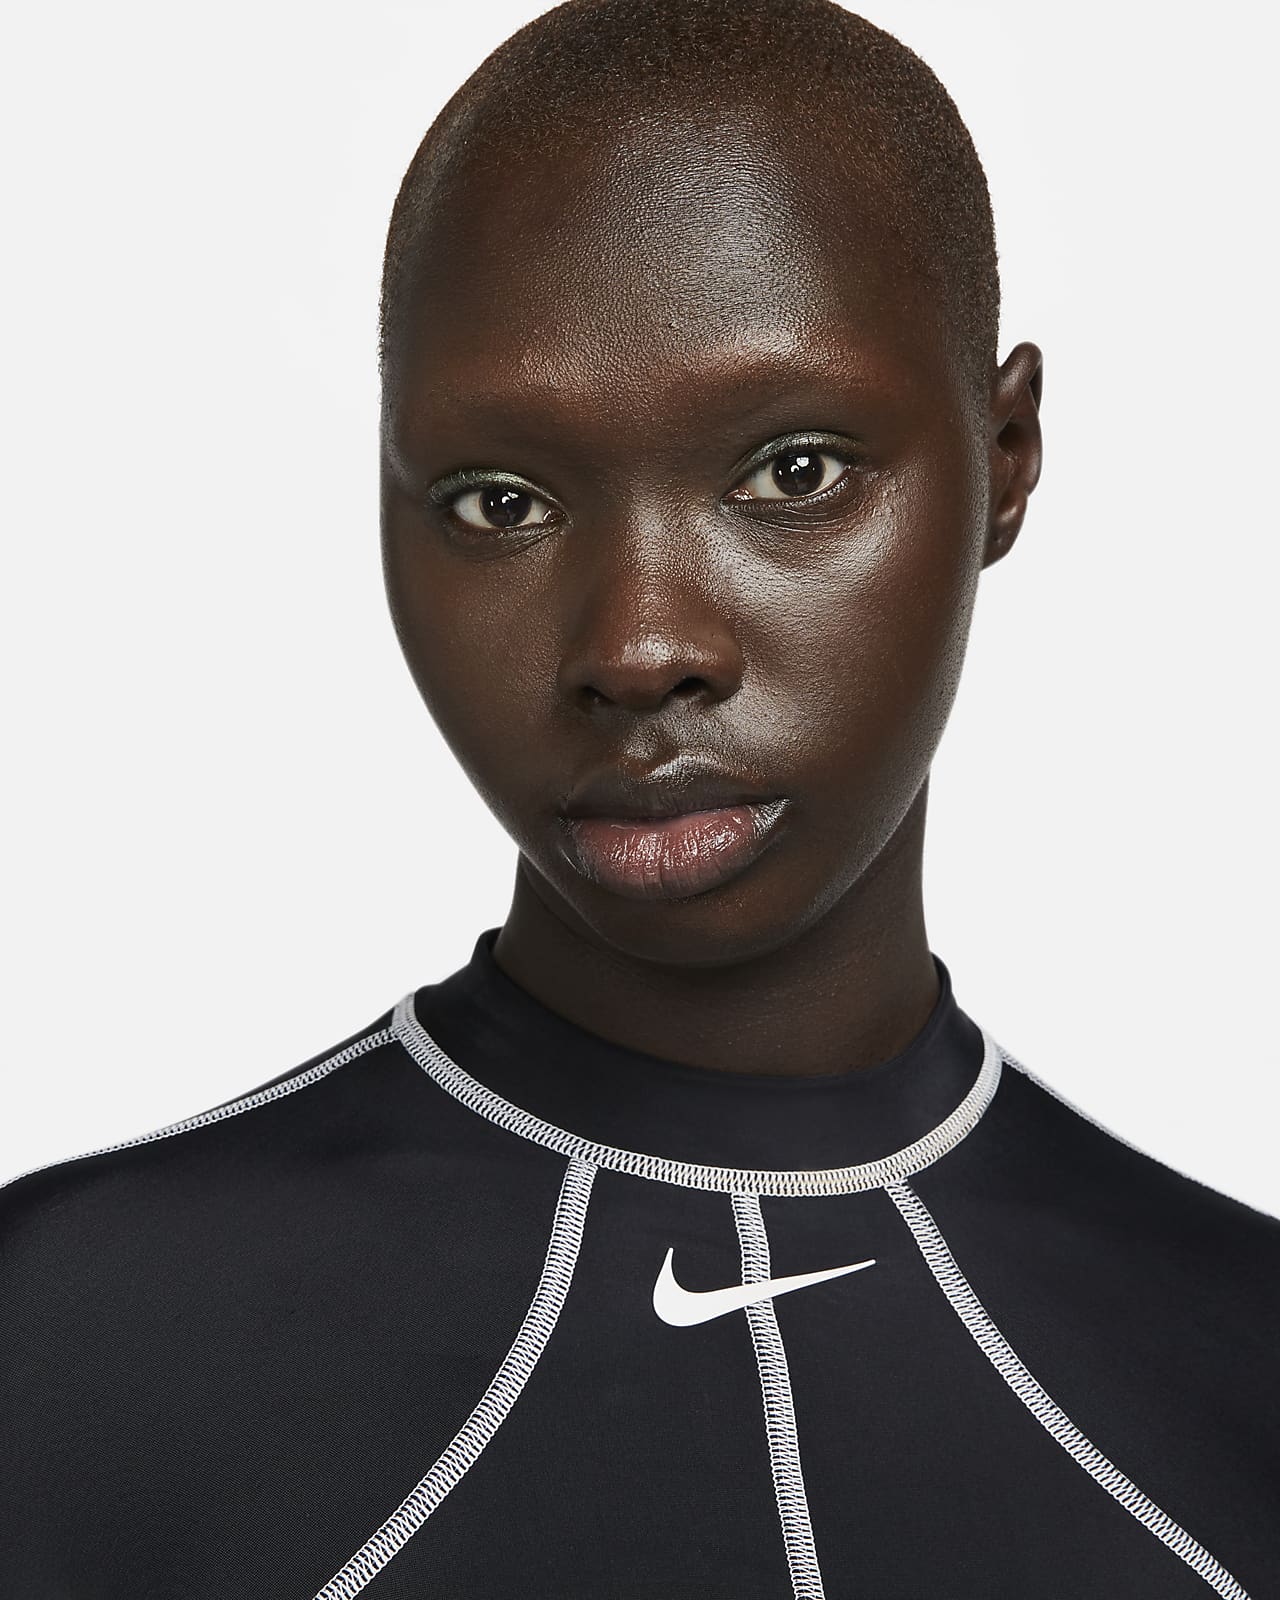 Nike Women's Sport Mesh Short Sleeve Zip Hydroguard